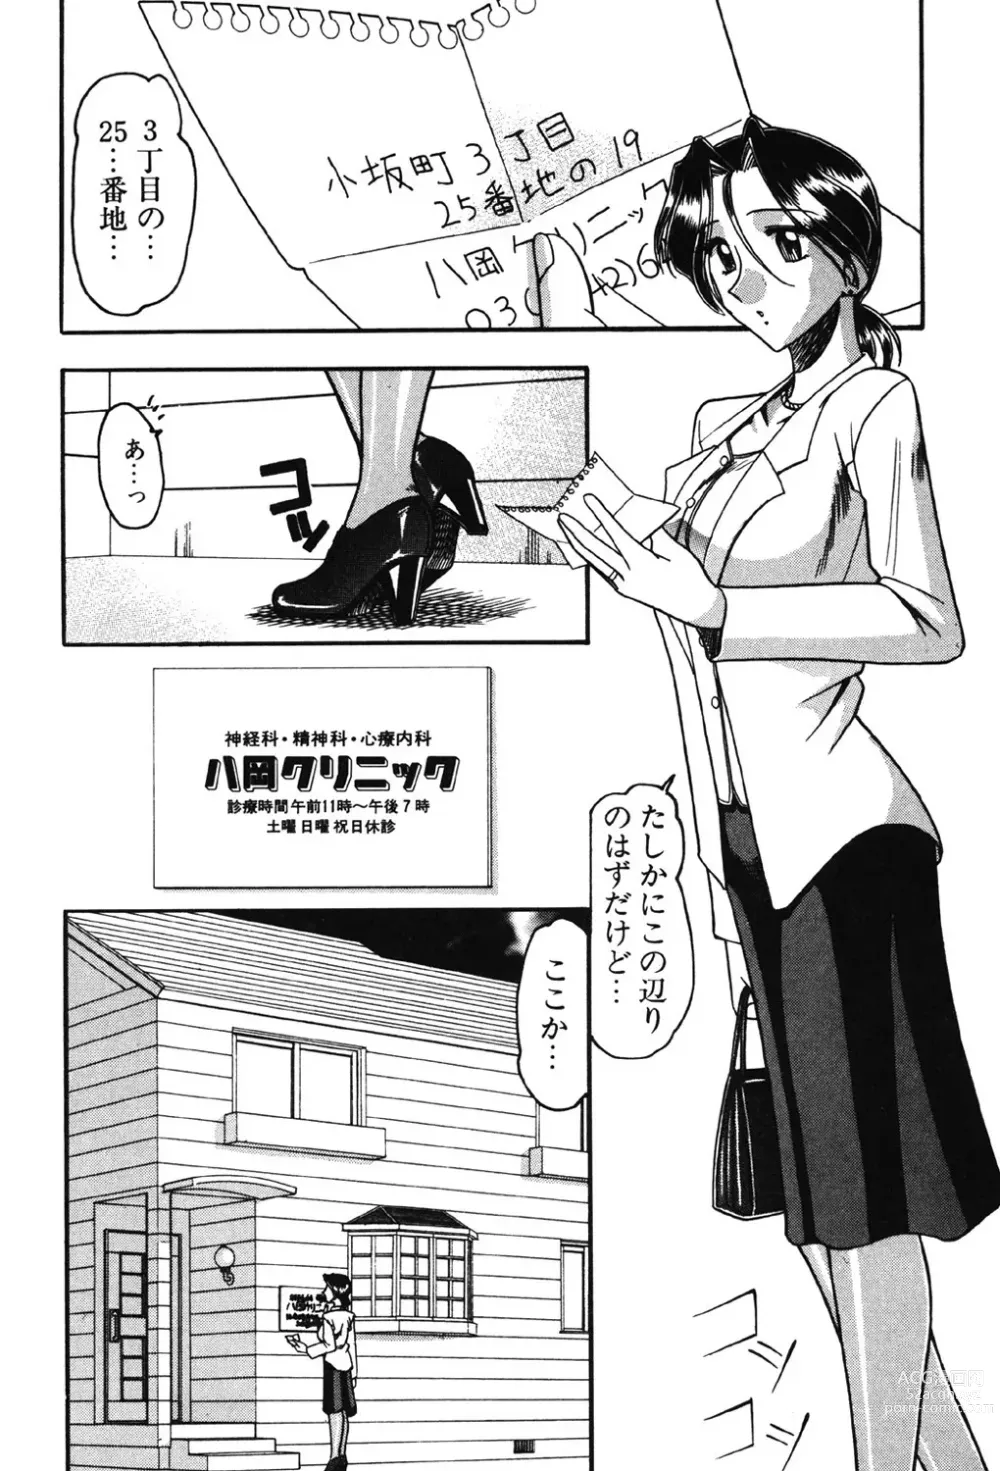 Page 37 of manga Hahaoya Ga Onna Ni Naru Toki